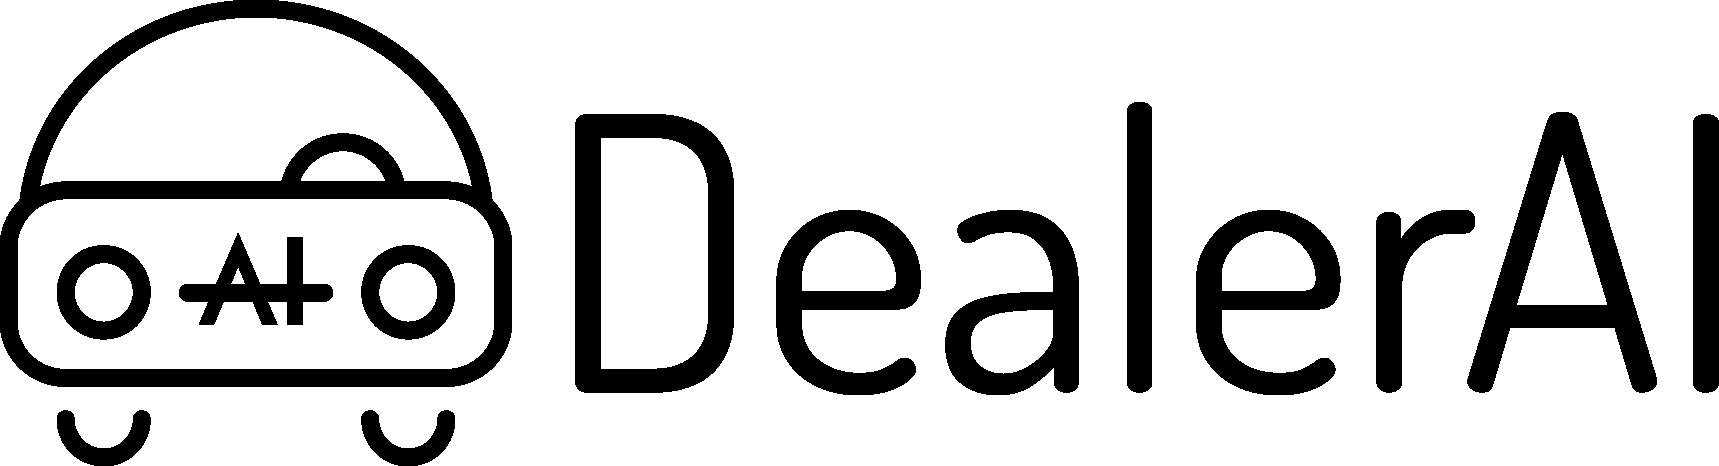 dealerai-logo-long-black.png